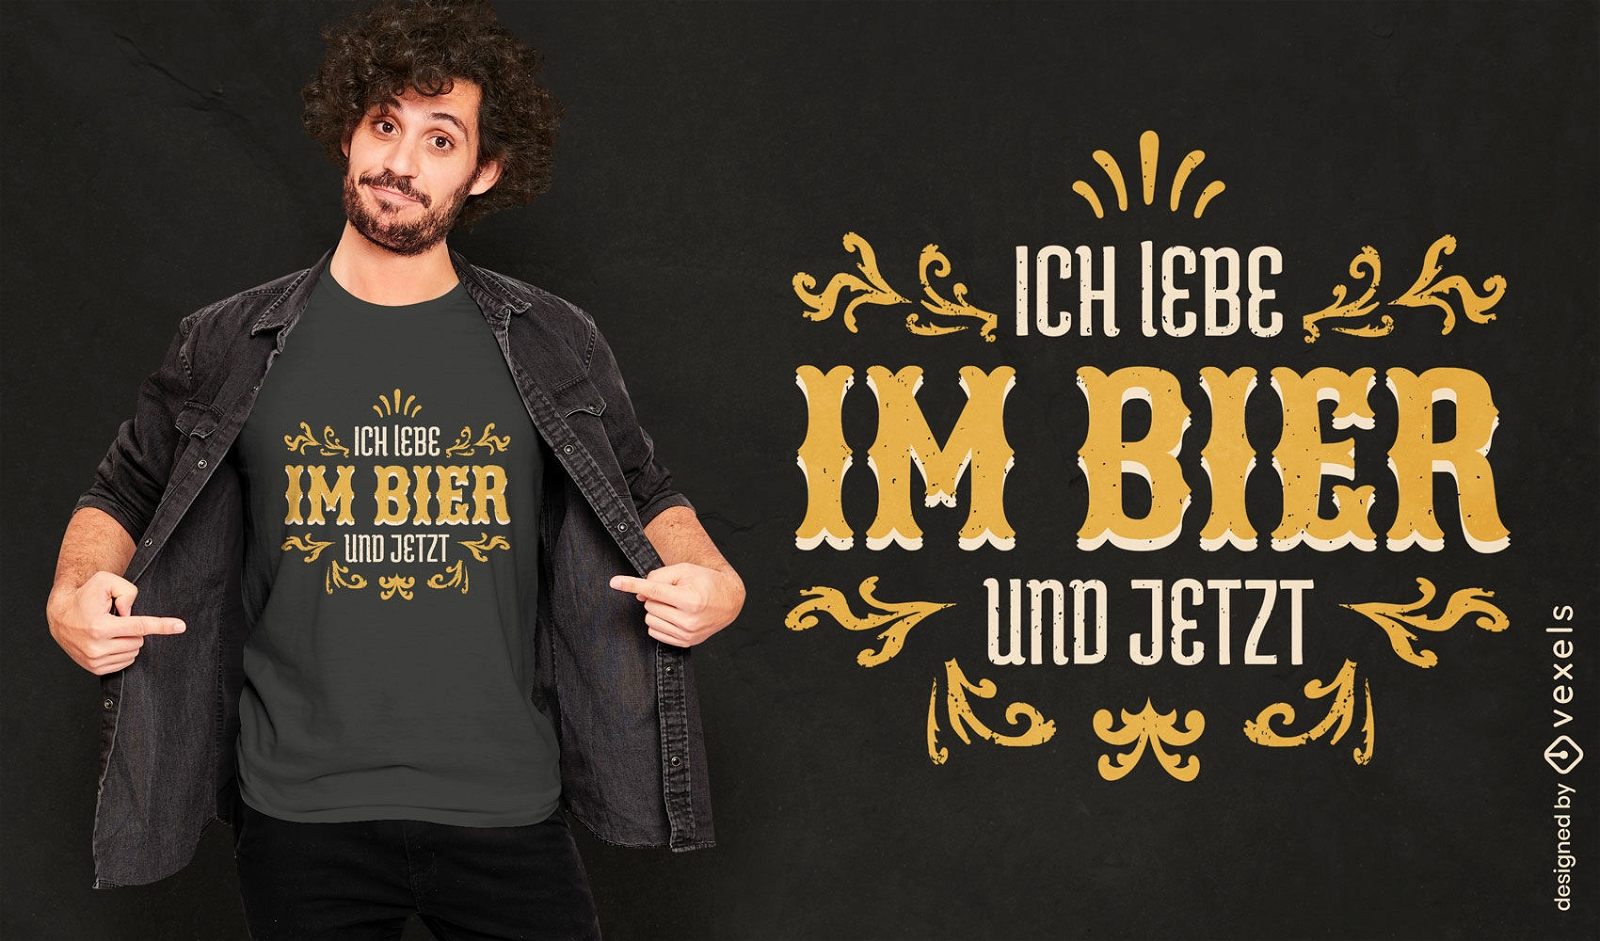 Dise?o divertido de la camiseta de la cita alemana de la bebida de la cerveza